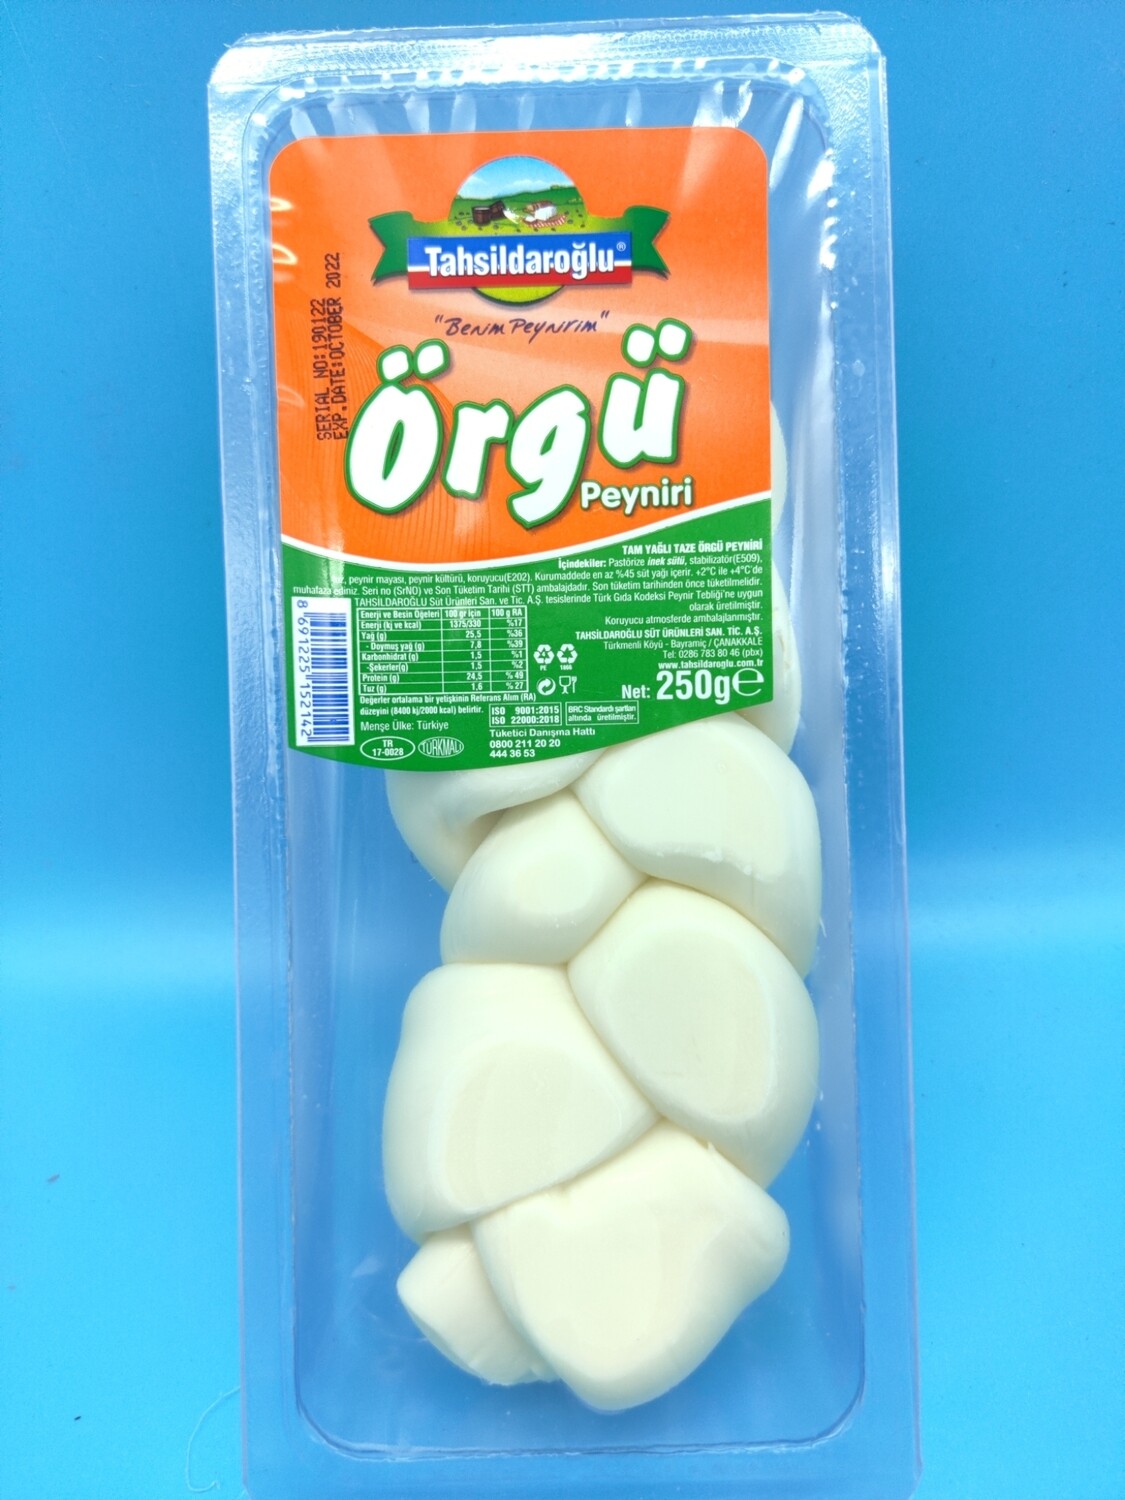 Tahsildaroglu Knitting Cheese Orgu Peyniri 250g vac pack